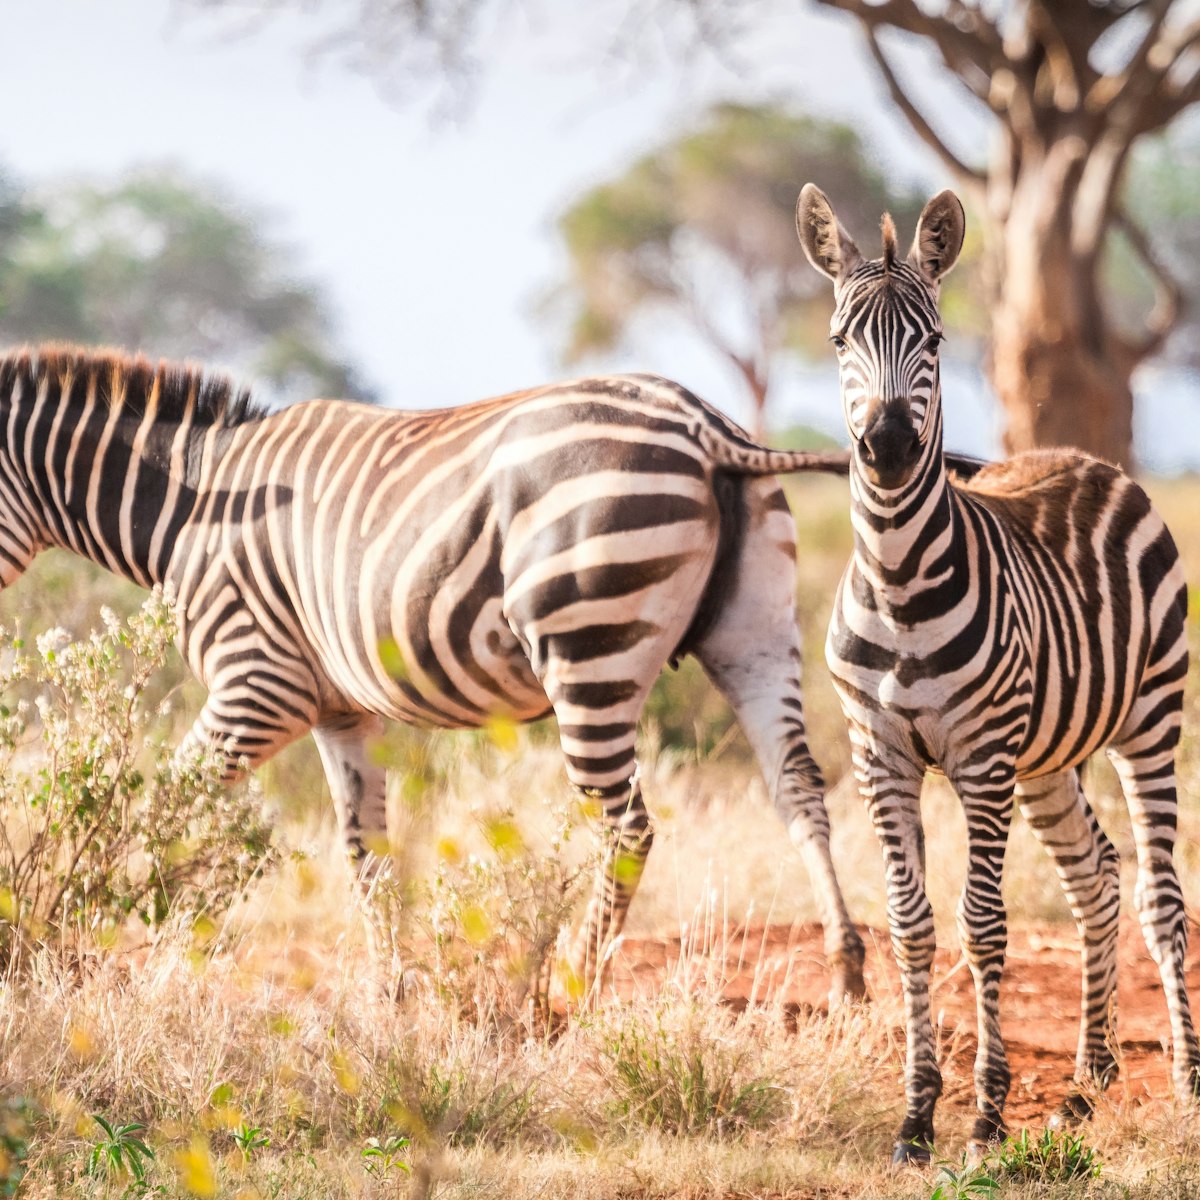 Wild zebras in Tsavo West National Park, Kenya.